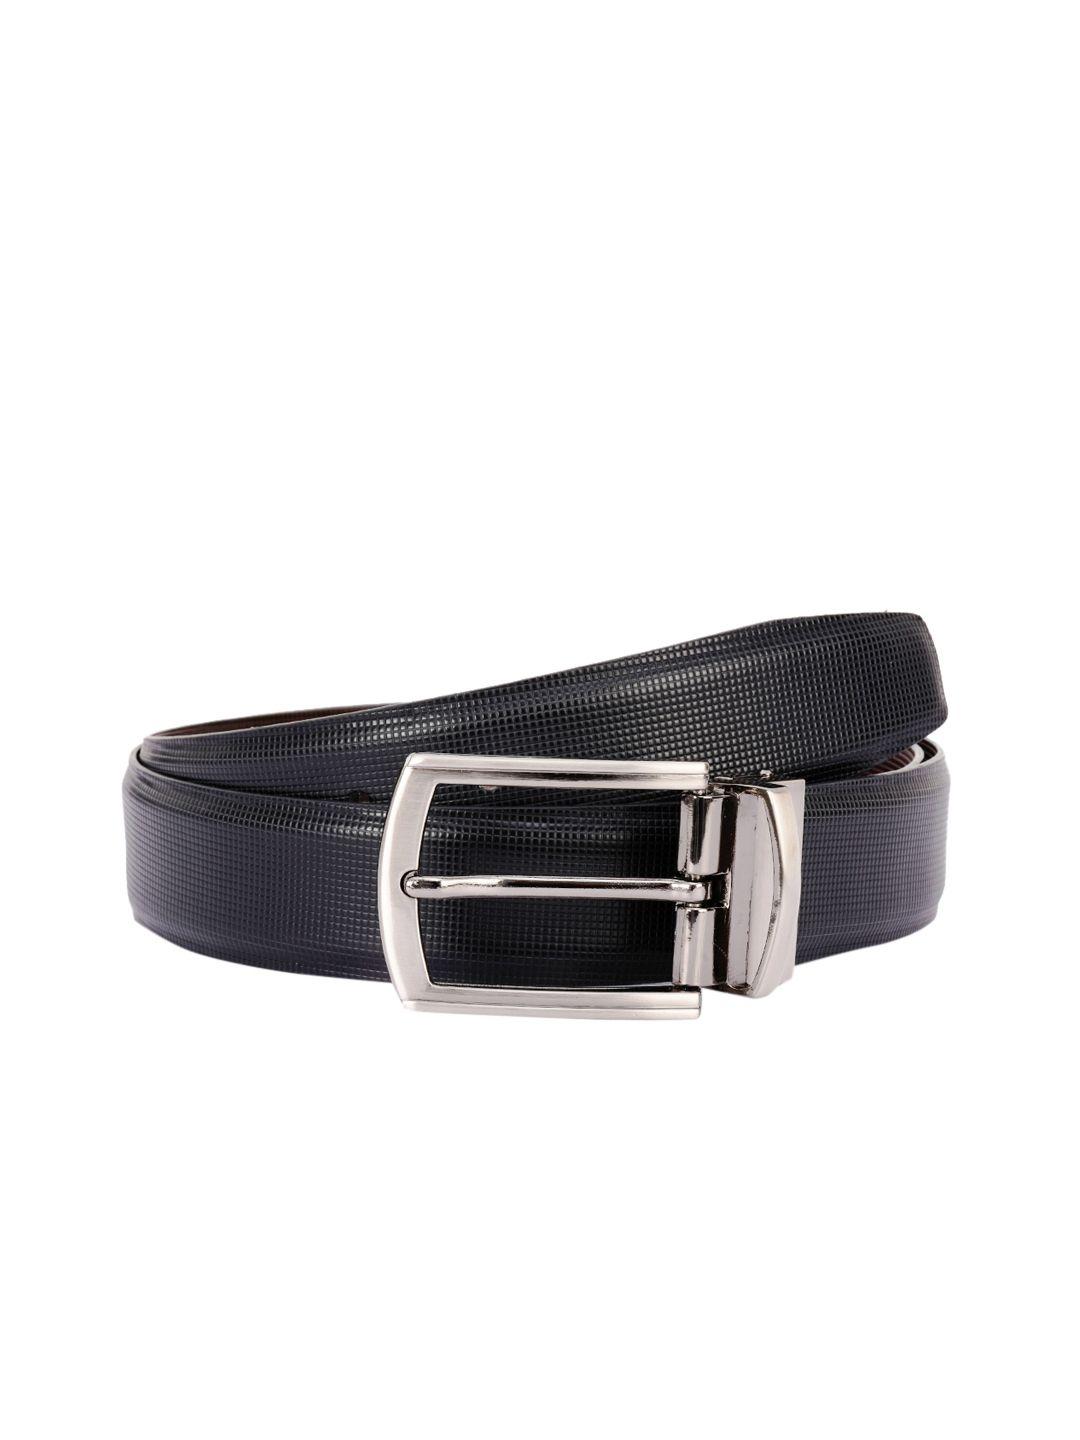 KEZRO Men Black & Brown Textured Reversible Belt